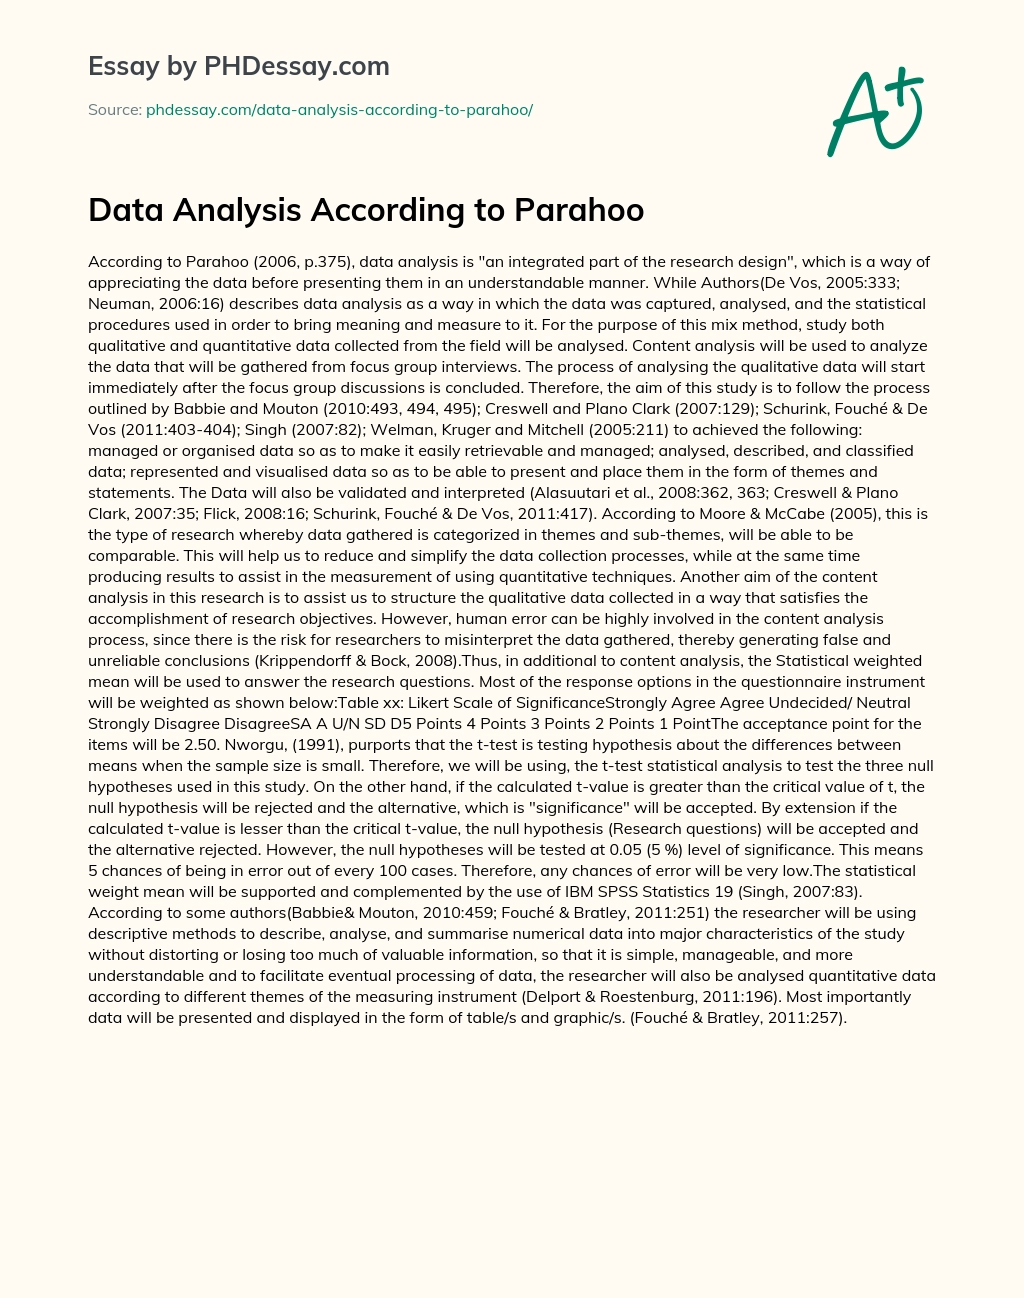 Data Analysis According to Parahoo essay